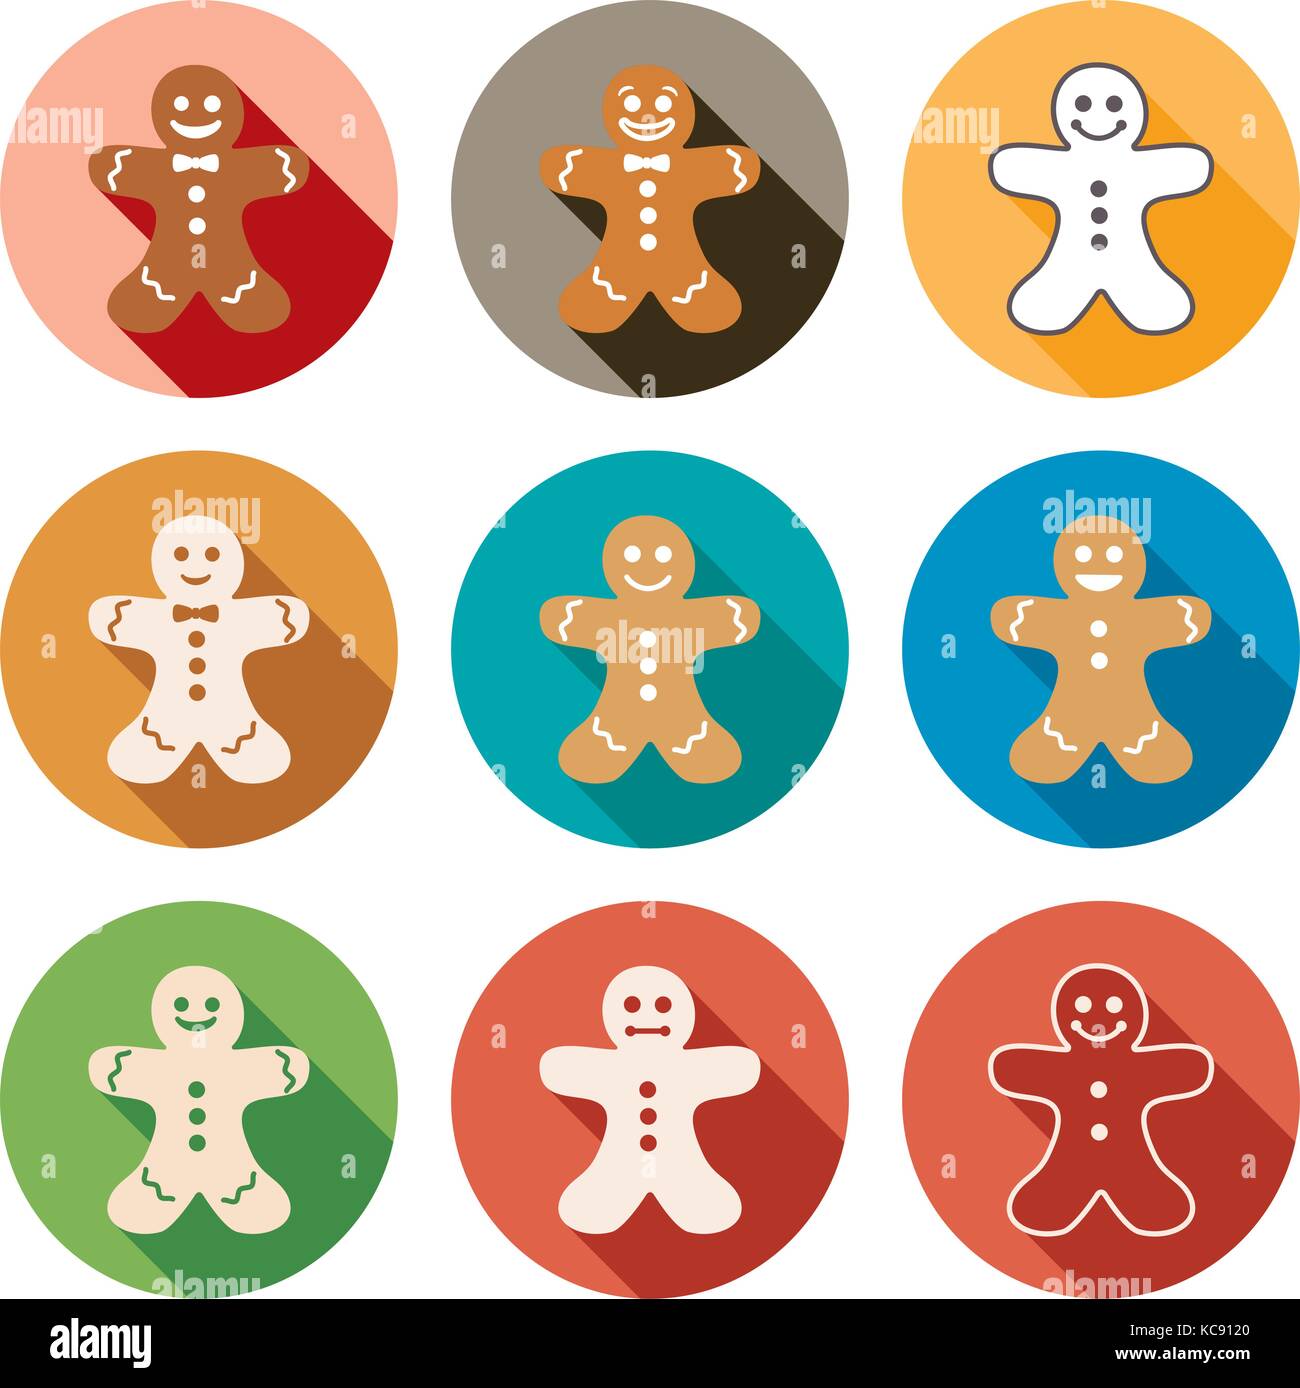 vector flat icons of gingerbread men Stock Vector